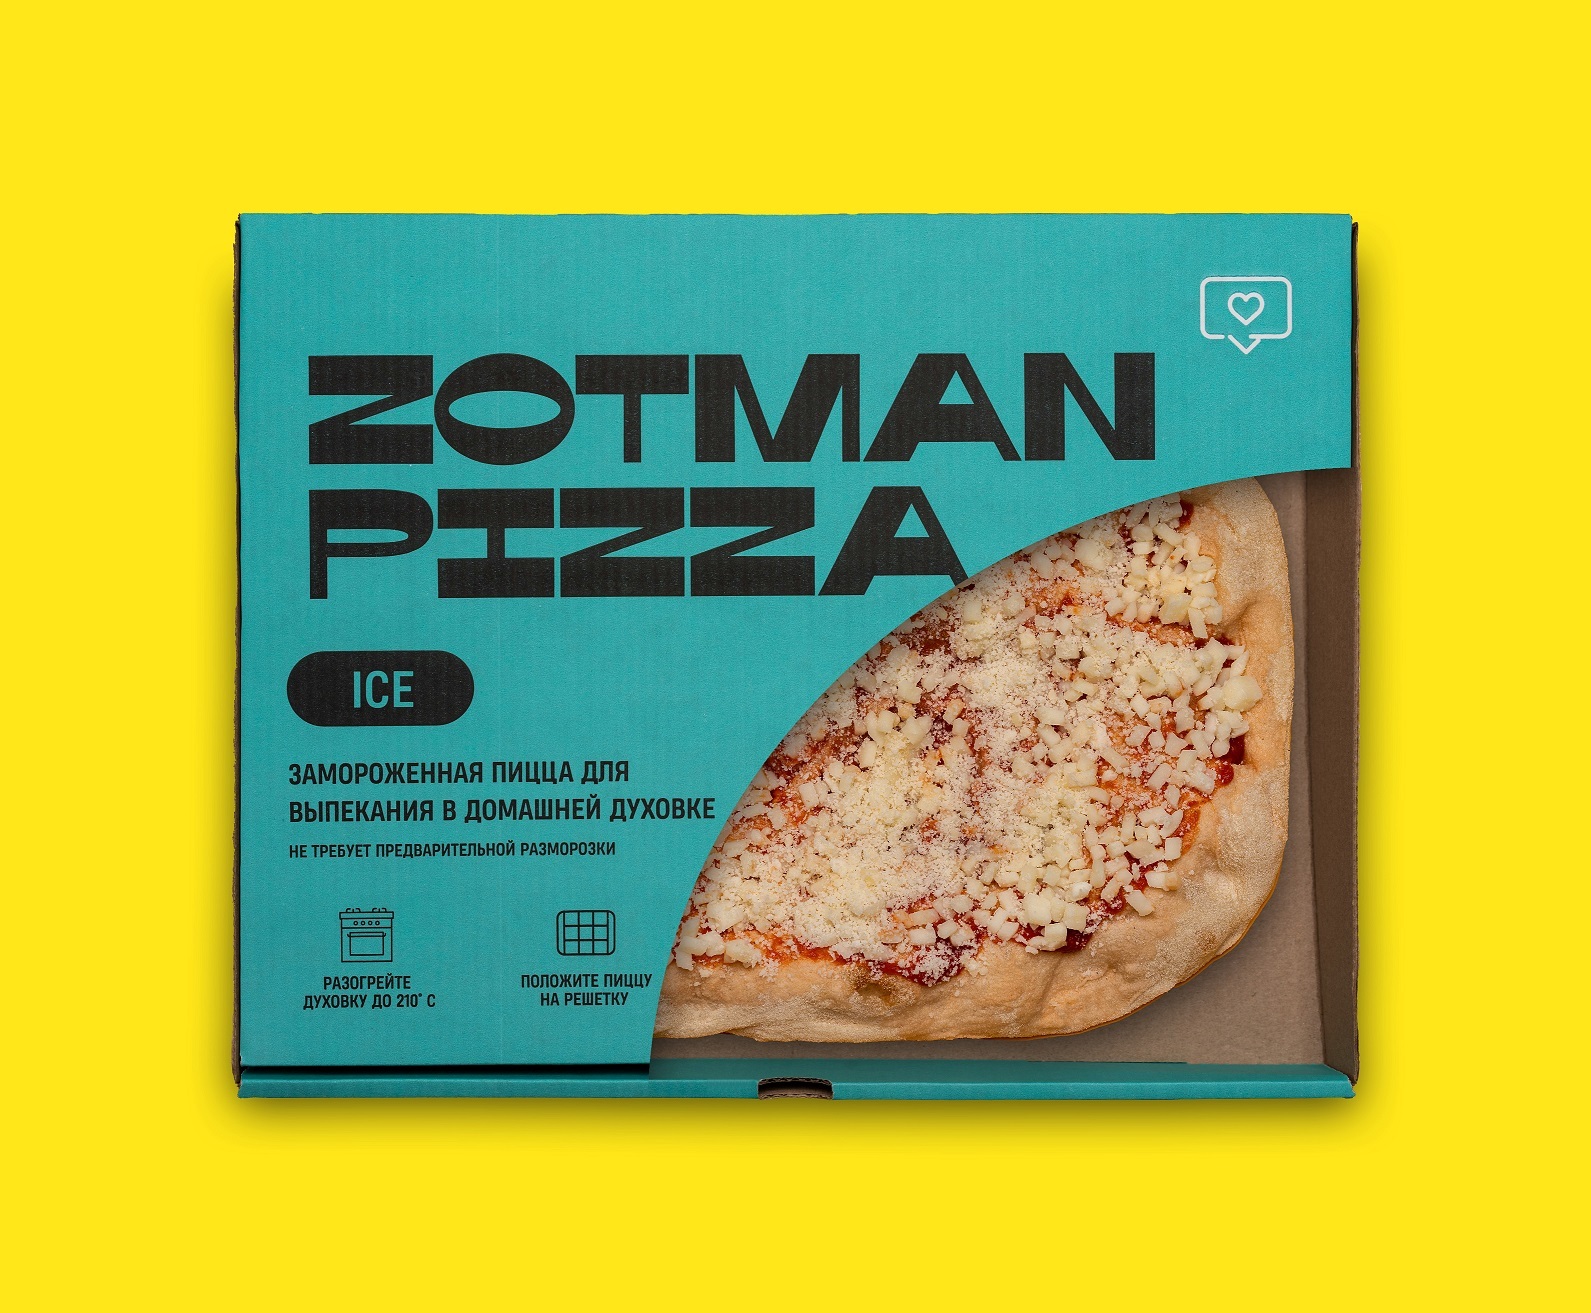 Zotman pizza Маргарита